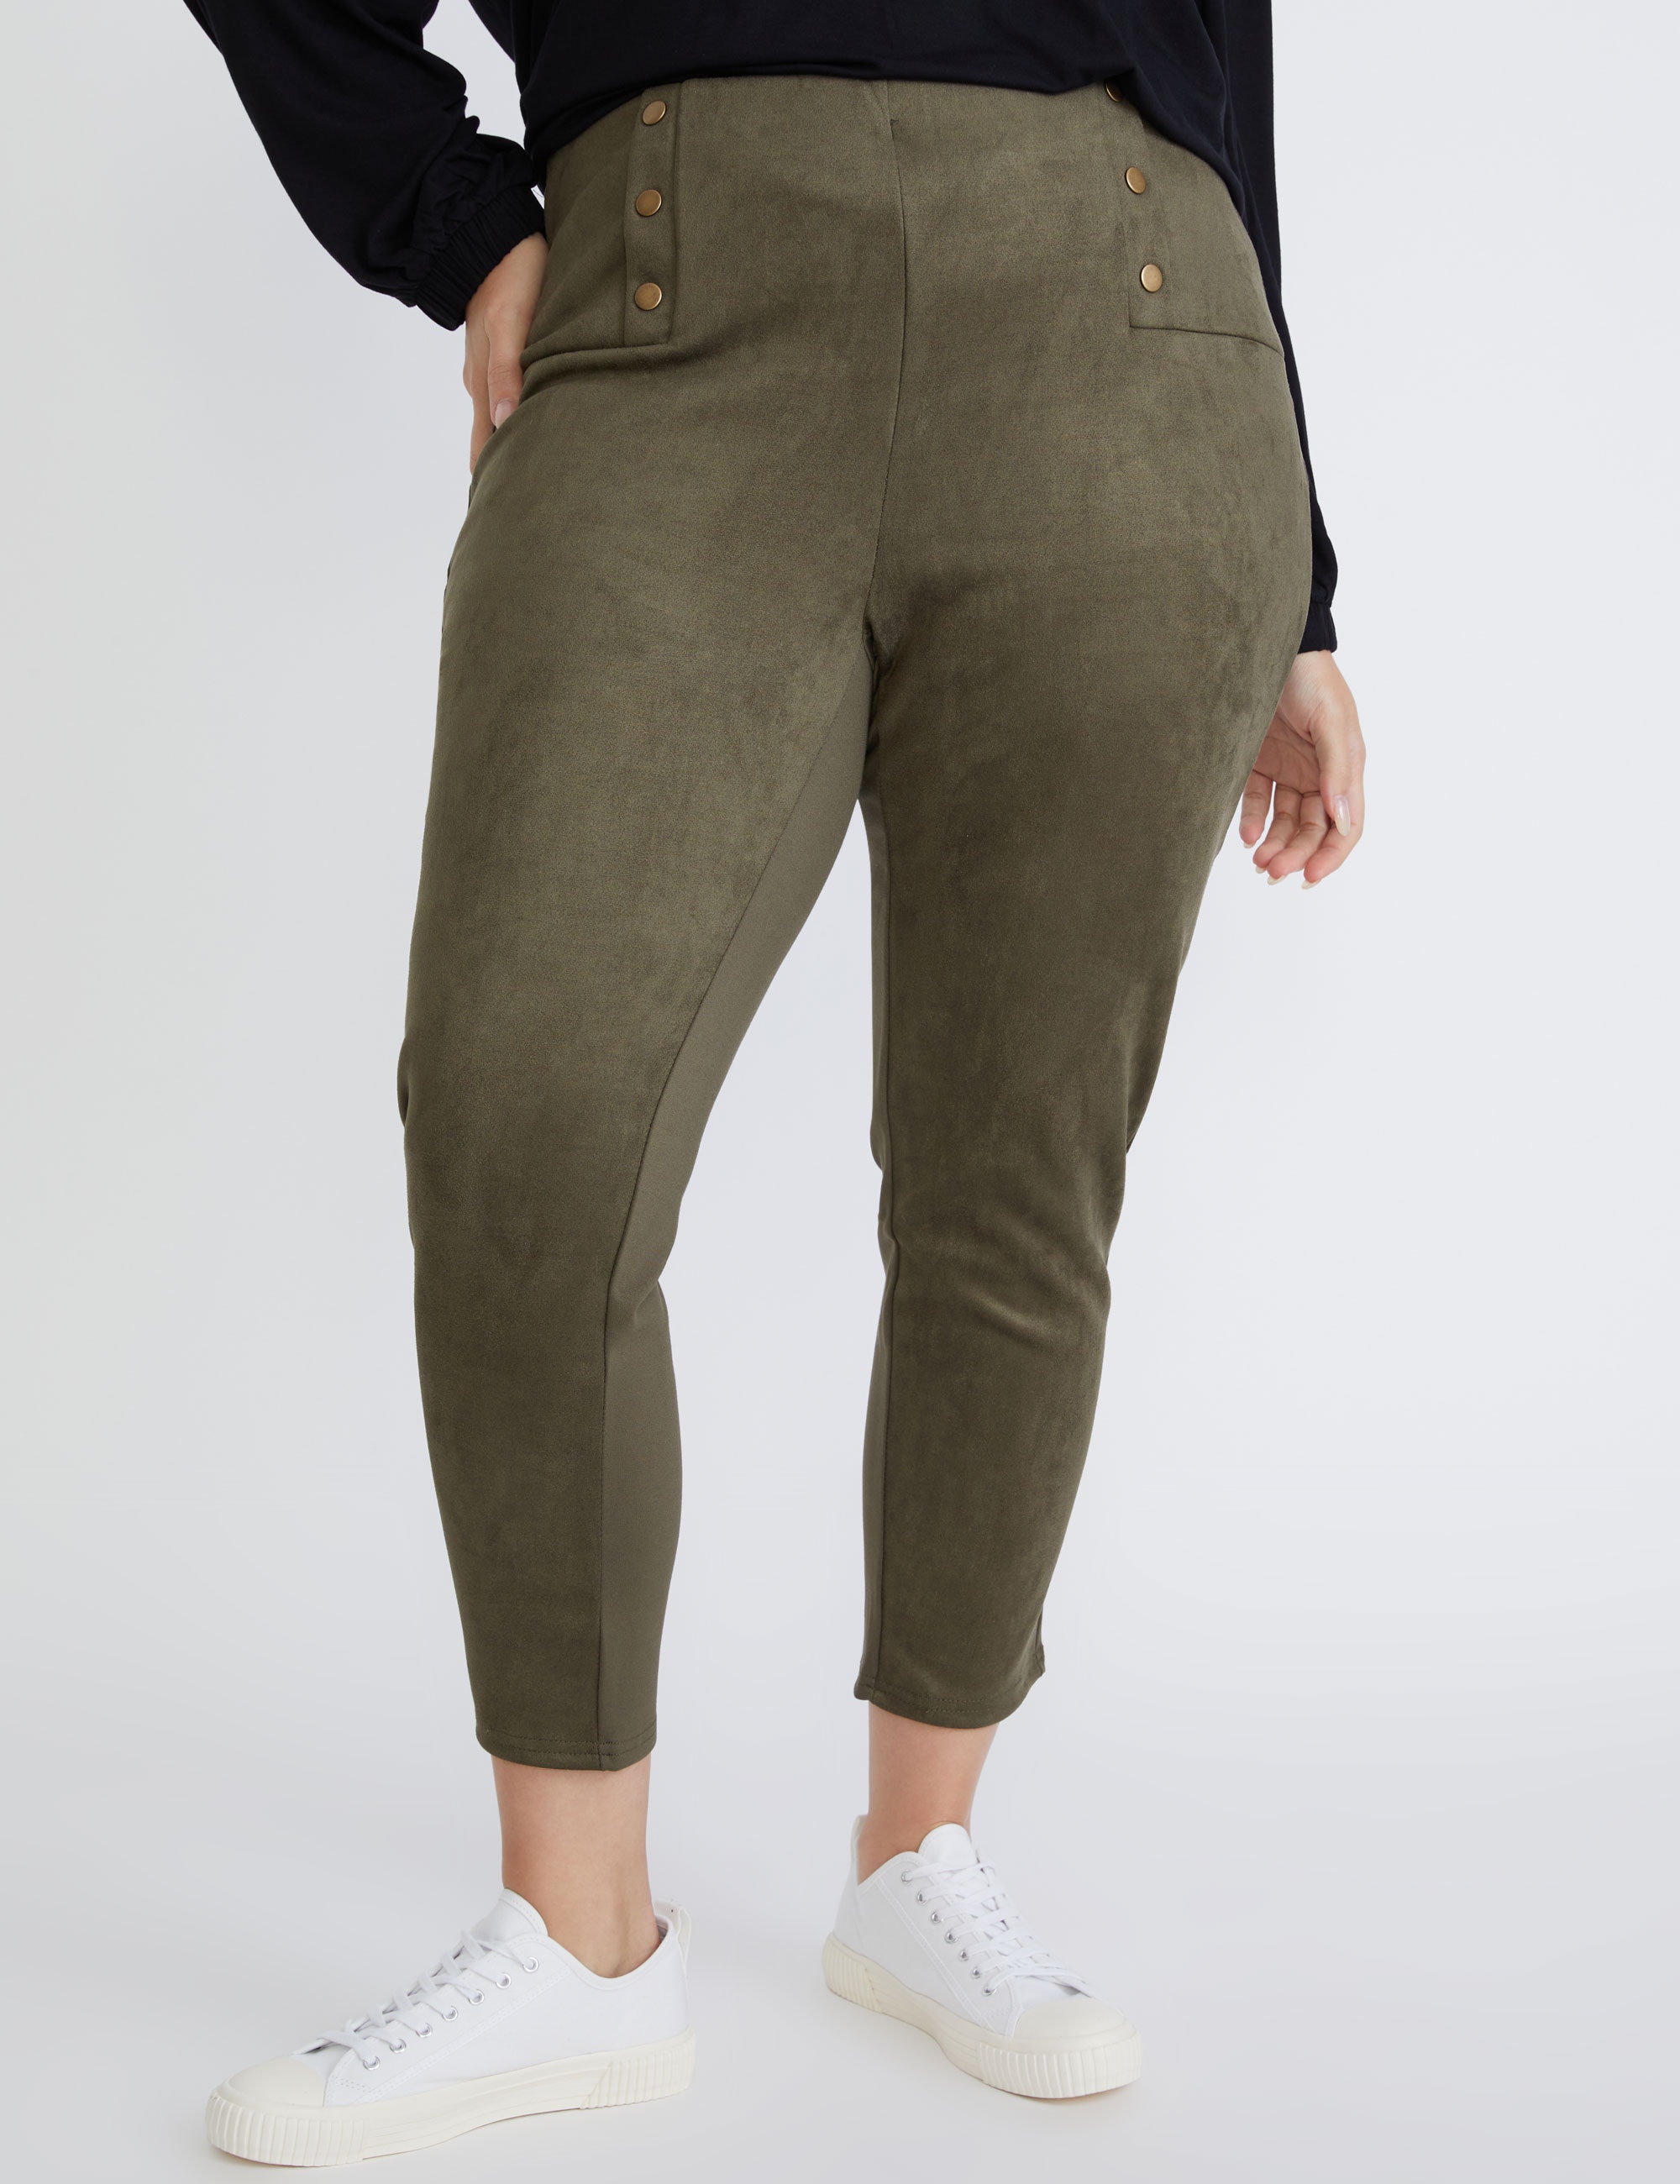 BeMe - Plus Size - Womens Jeans - Brown Jeggings - Leggings - Casual  Fashion